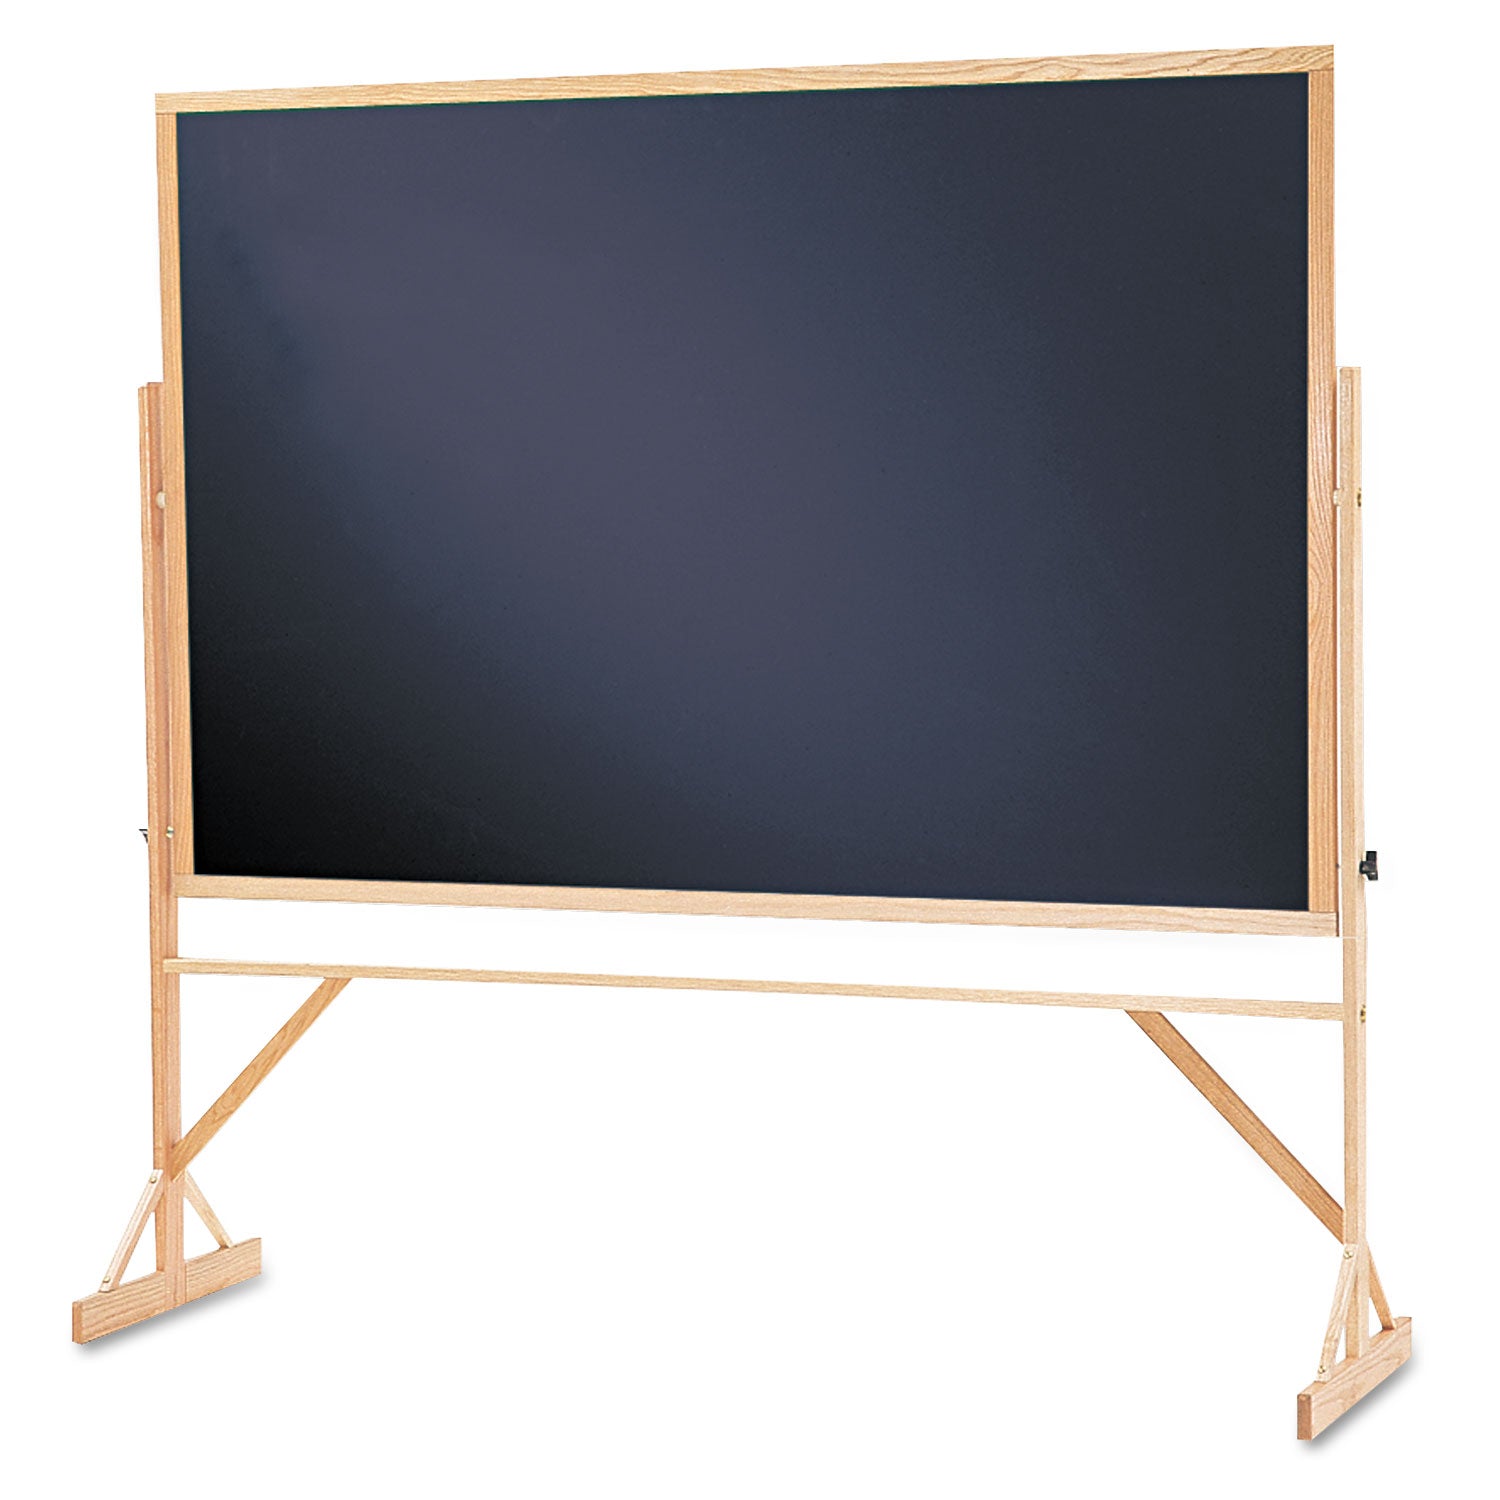 Reversible Chalkboard, 72 x 48, Black Surface, Oak Hardwood Frame - 